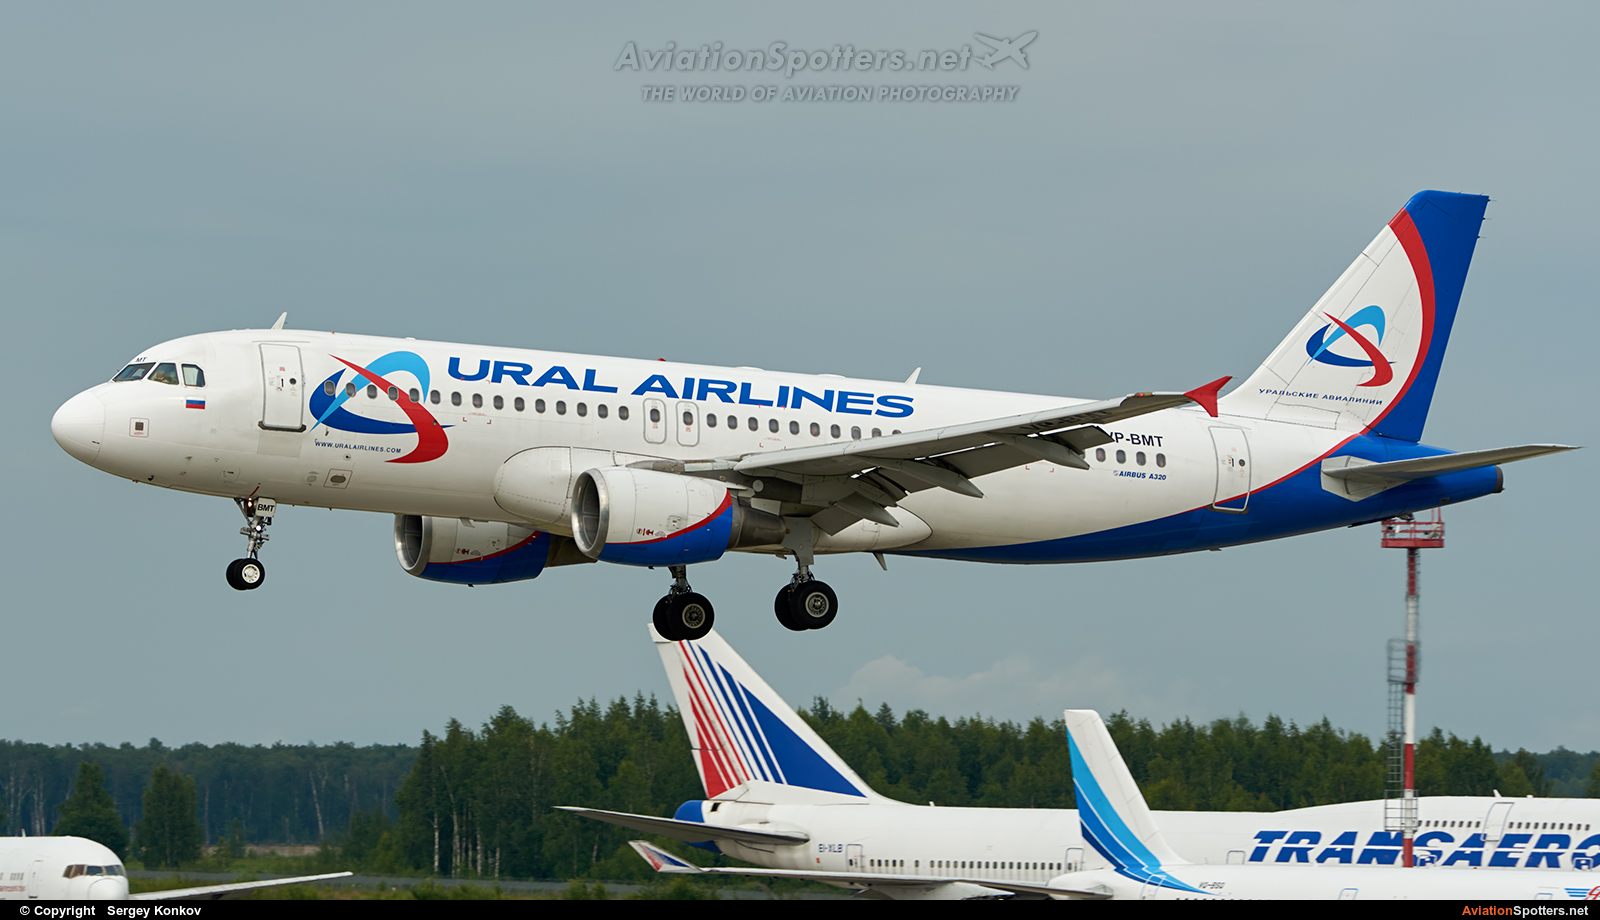 Ural Airlines  -  A320-214  (VP-BMT) By Sergey Konkov (Сергей Коньков)